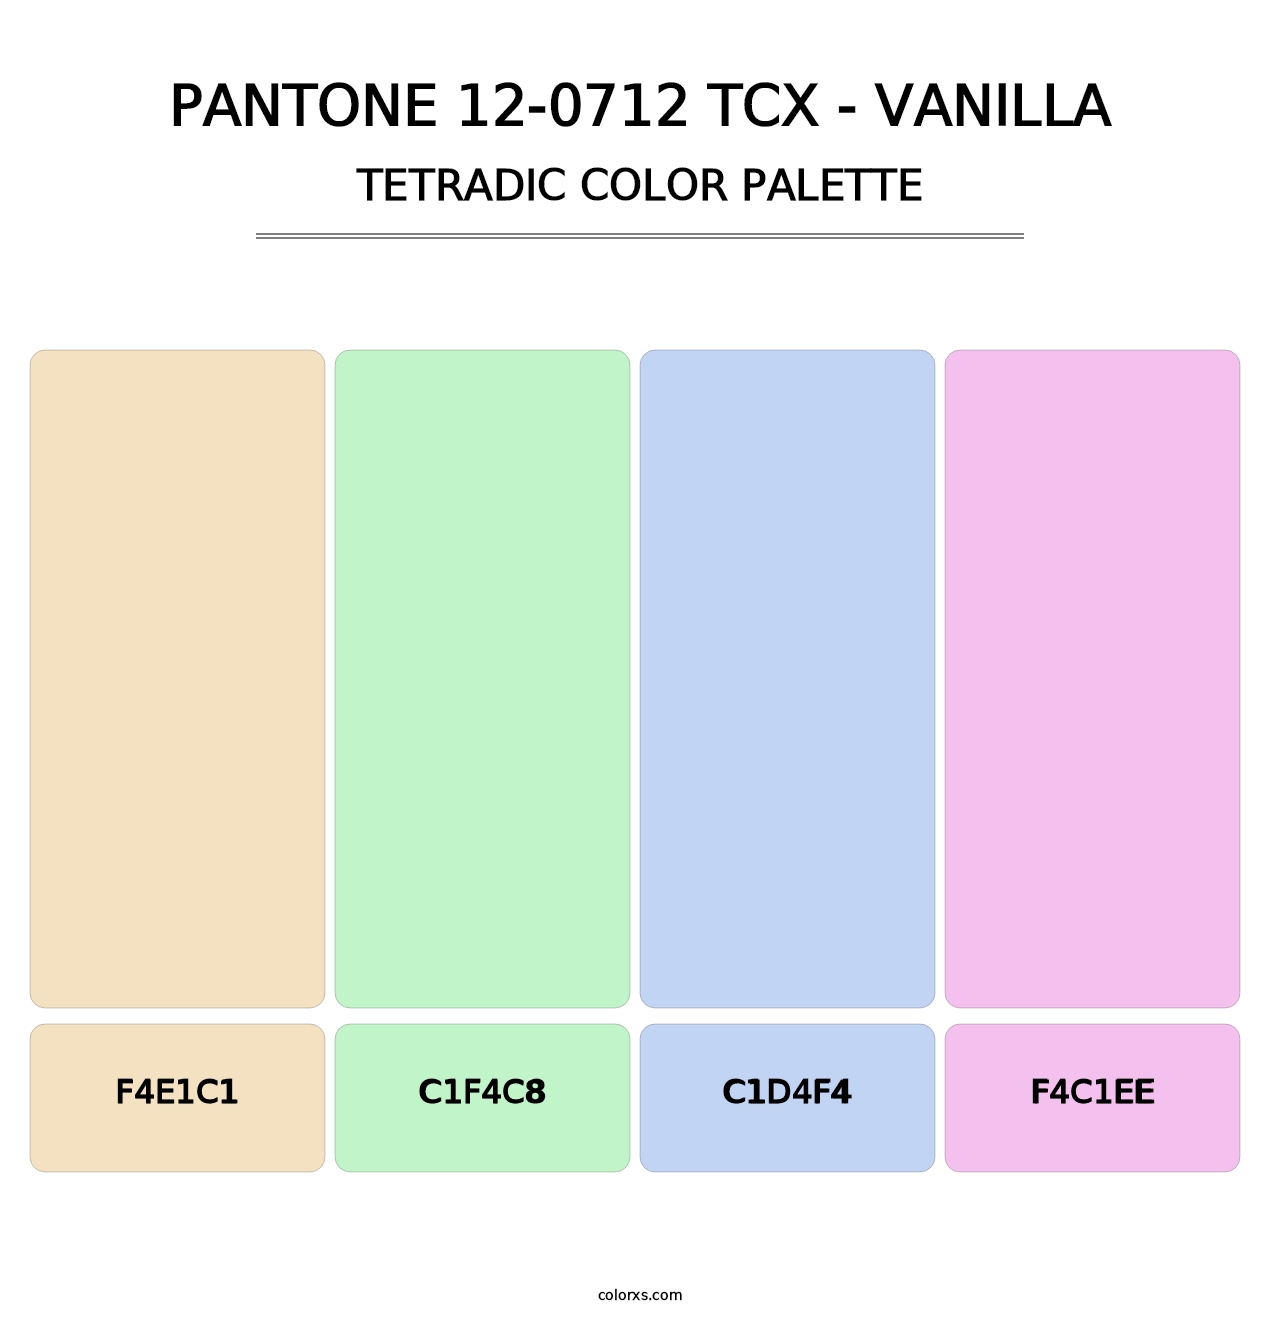 PANTONE 12-0712 TCX - Vanilla - Tetradic Color Palette